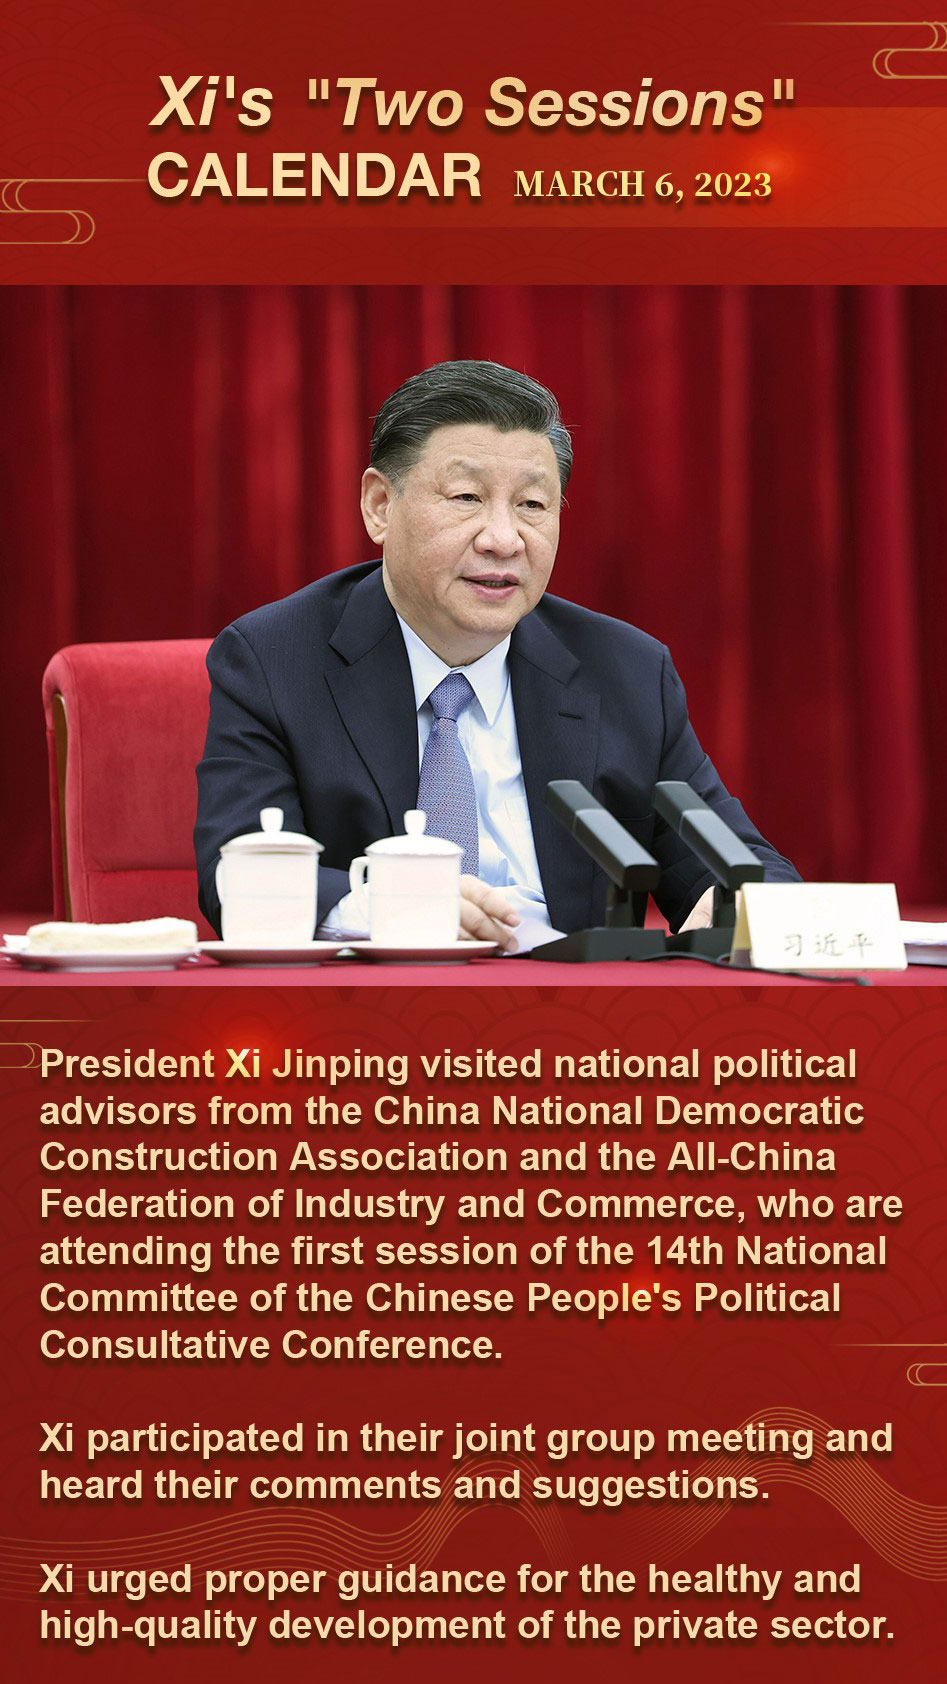 Xi's "Two Sessions" Calendar: Xi visits national political advisors